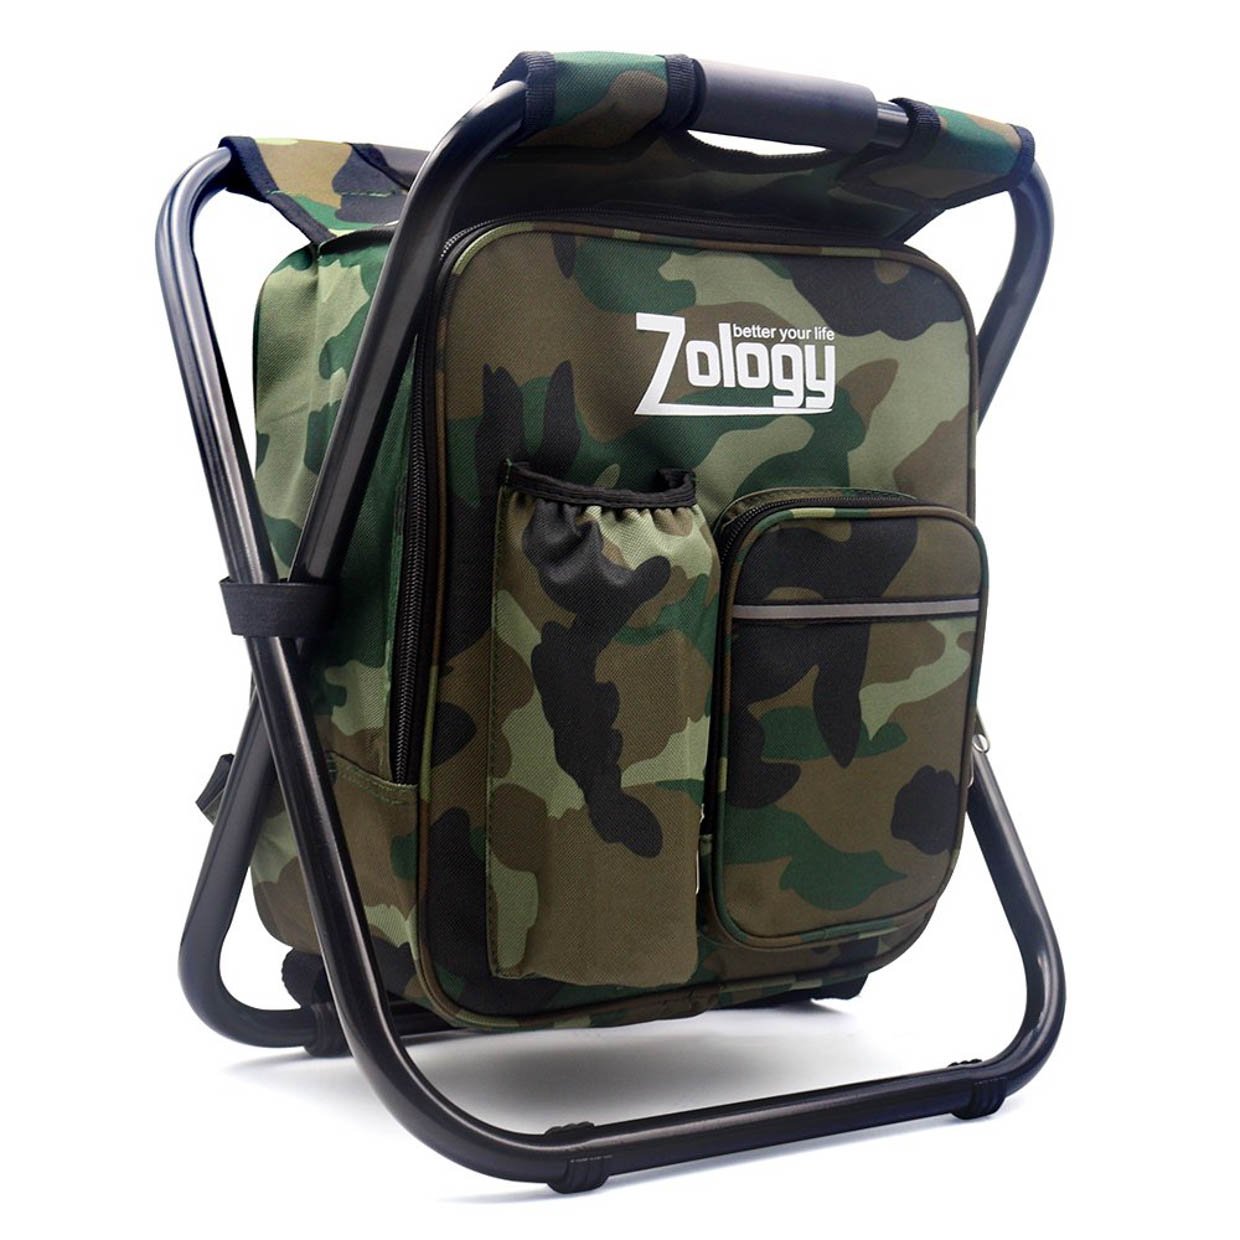 Zology Camping Chair Cooler